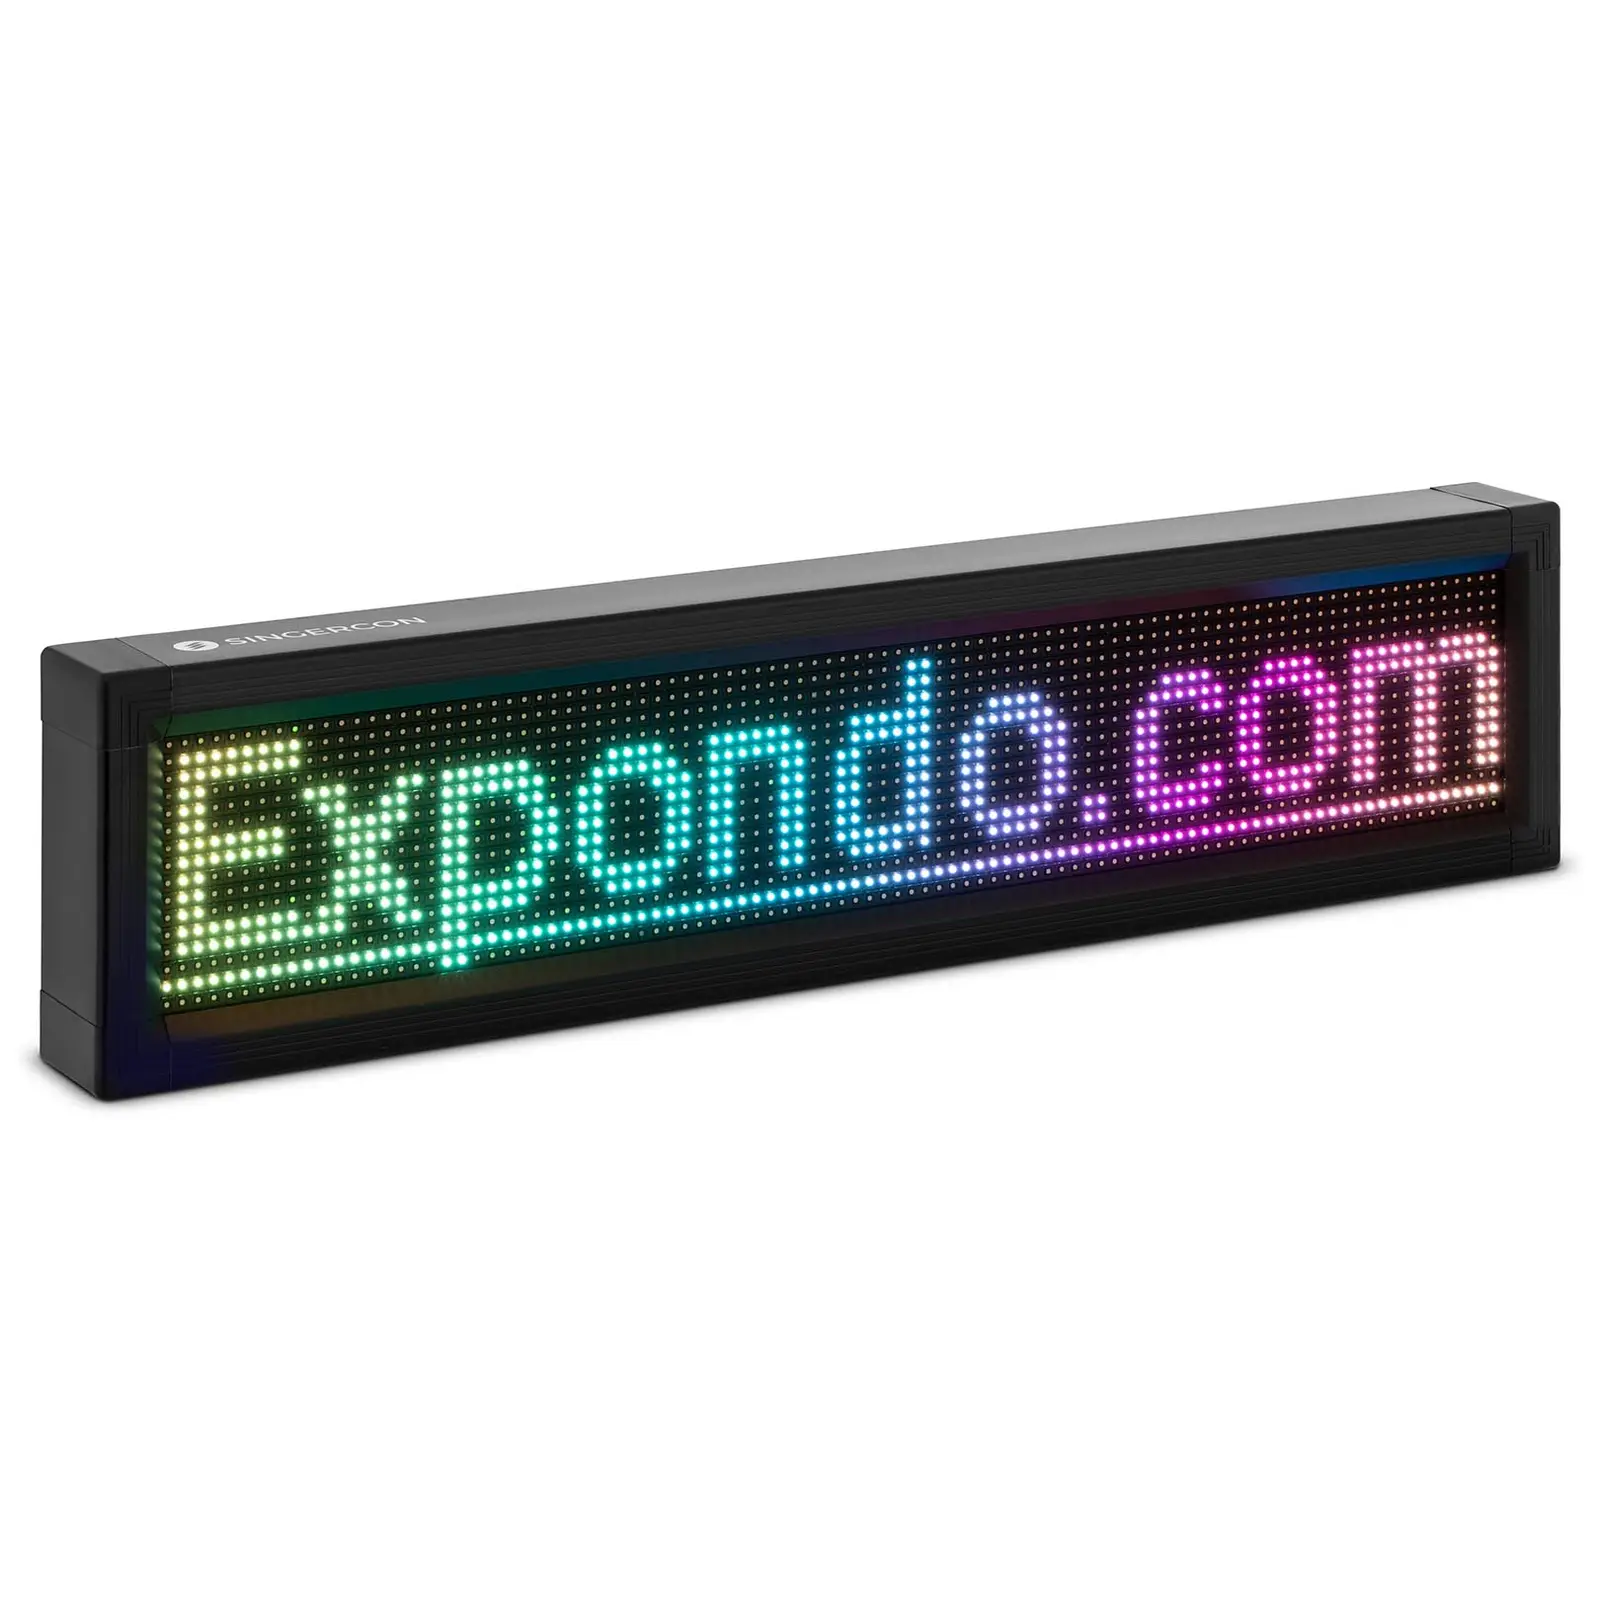 Panou de afișe cu LED-uri - 96 x 16 LED-uri colorate - 67 x 19 cm - programabil prin  iOS / Android